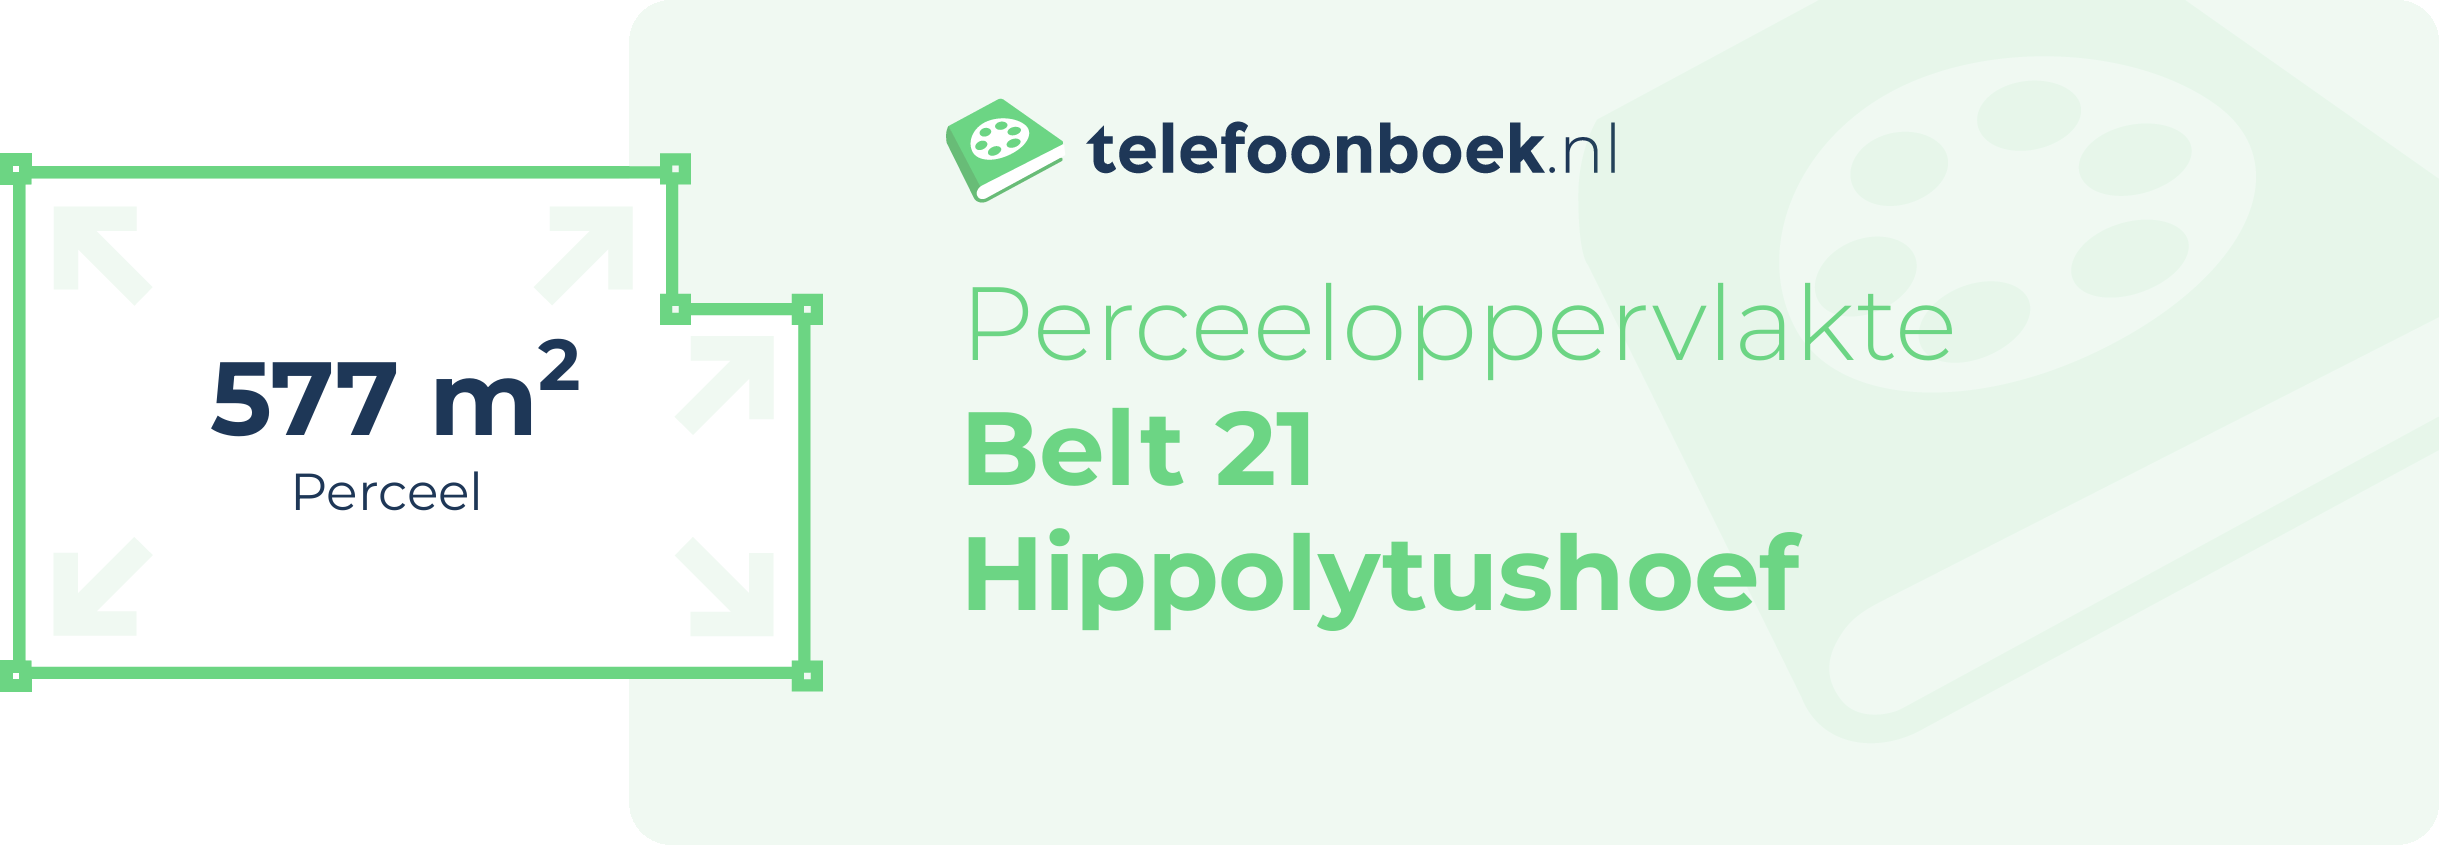 Perceeloppervlakte Belt 21 Hippolytushoef